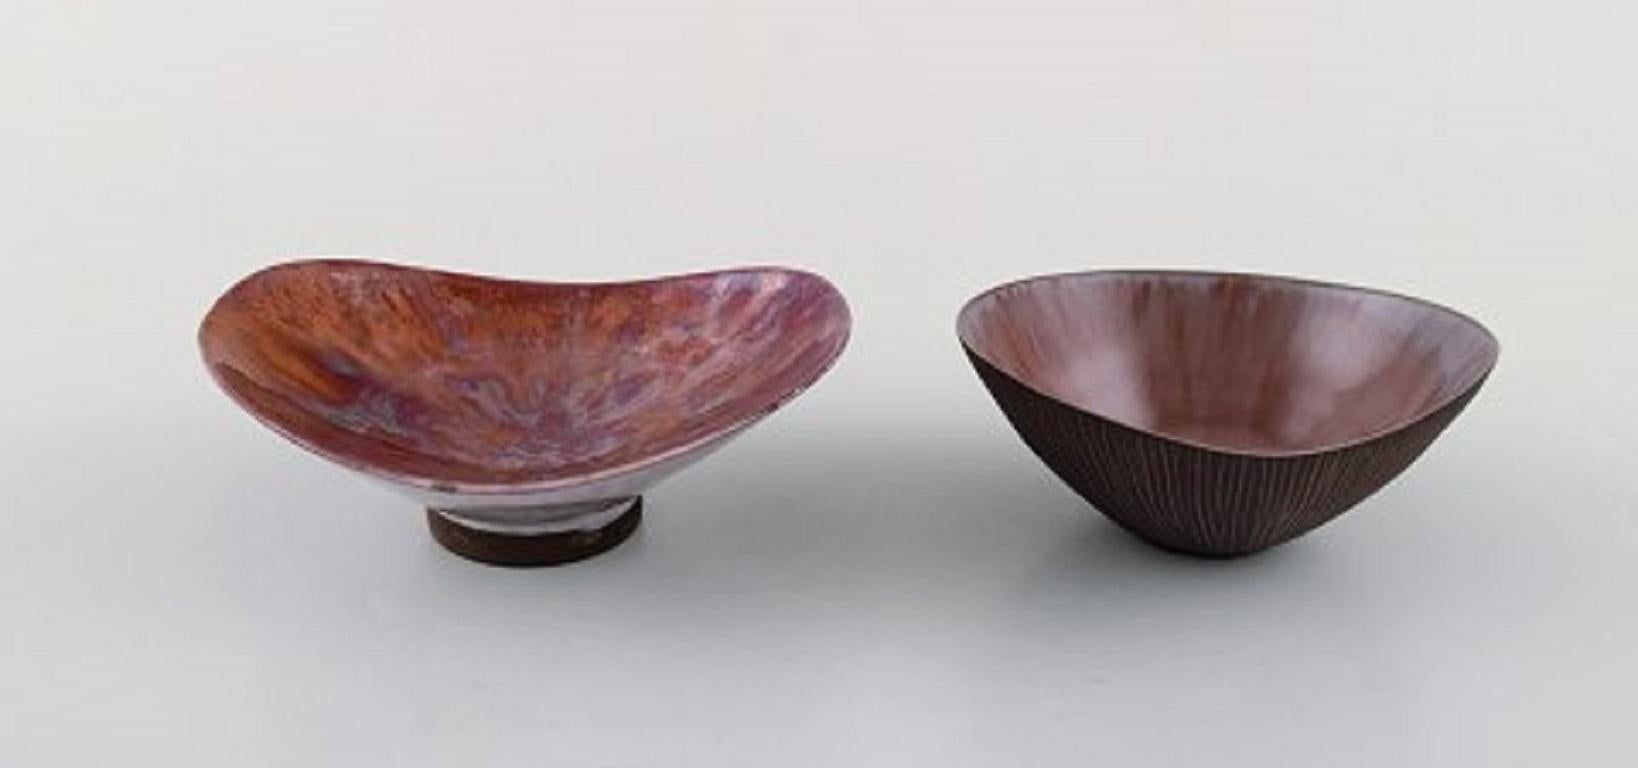 Sven Hofverberg (1923-1998) Swedish ceramist. Two unique glazed ceramic bowls. Beautiful metallic glaze, 1980s.
Largest measures: 11 x 4 cm.
In very good condition.
Signed.